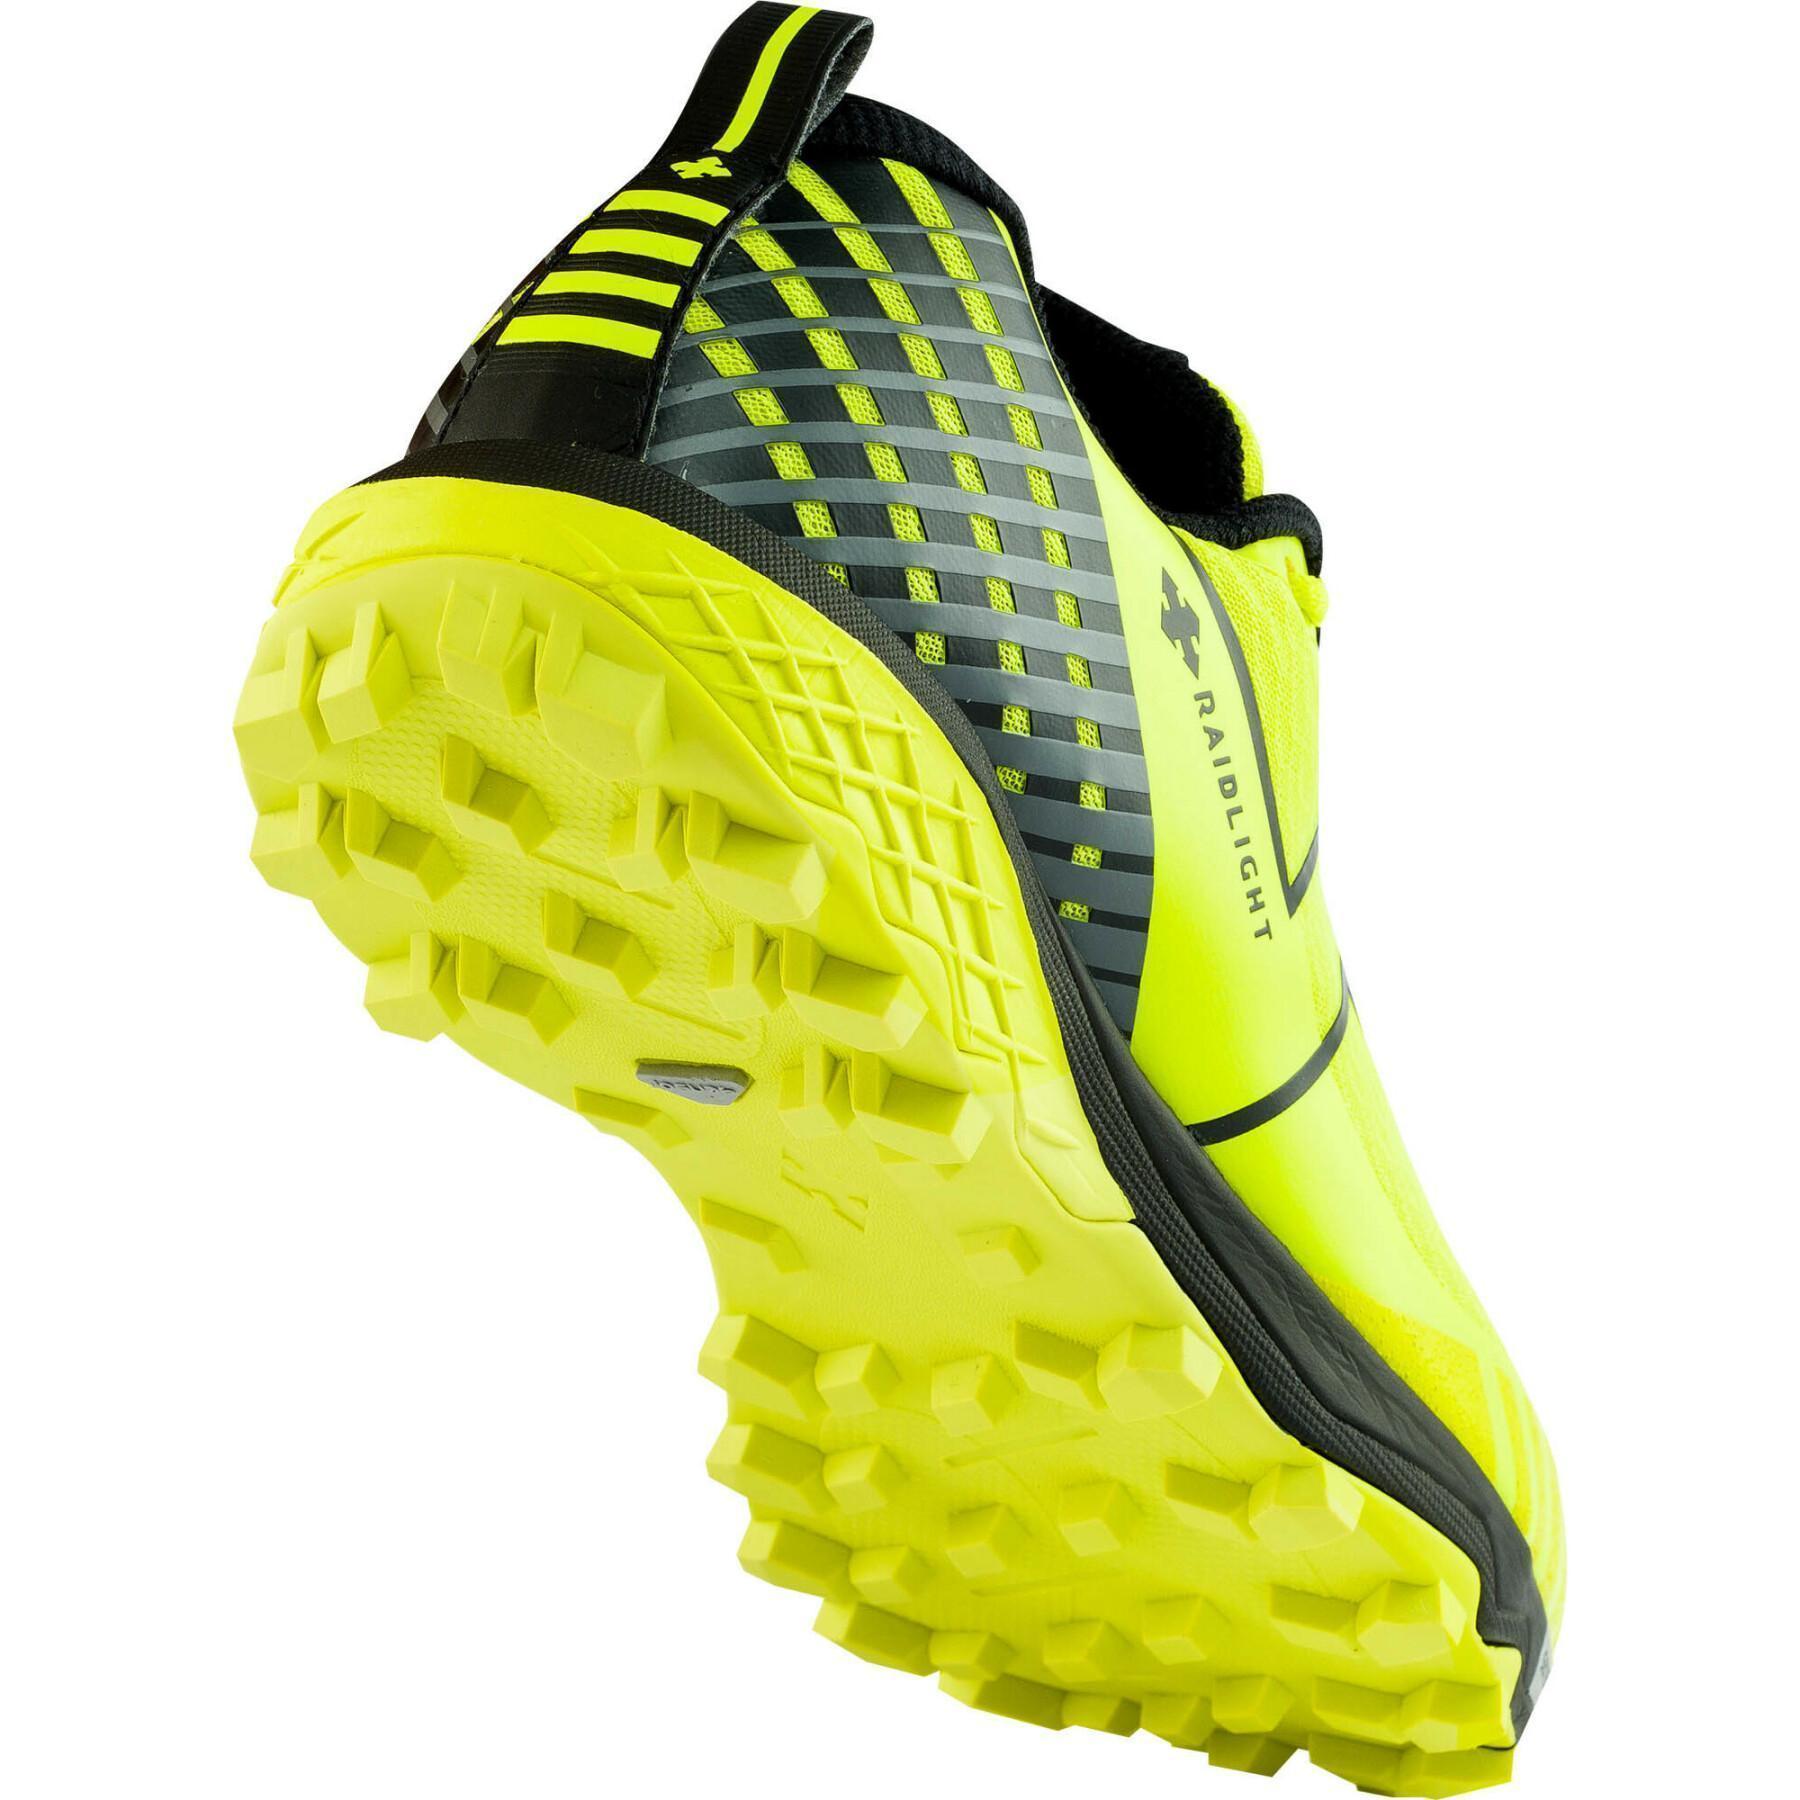 Schuhe RaidLight responsiv dynamic